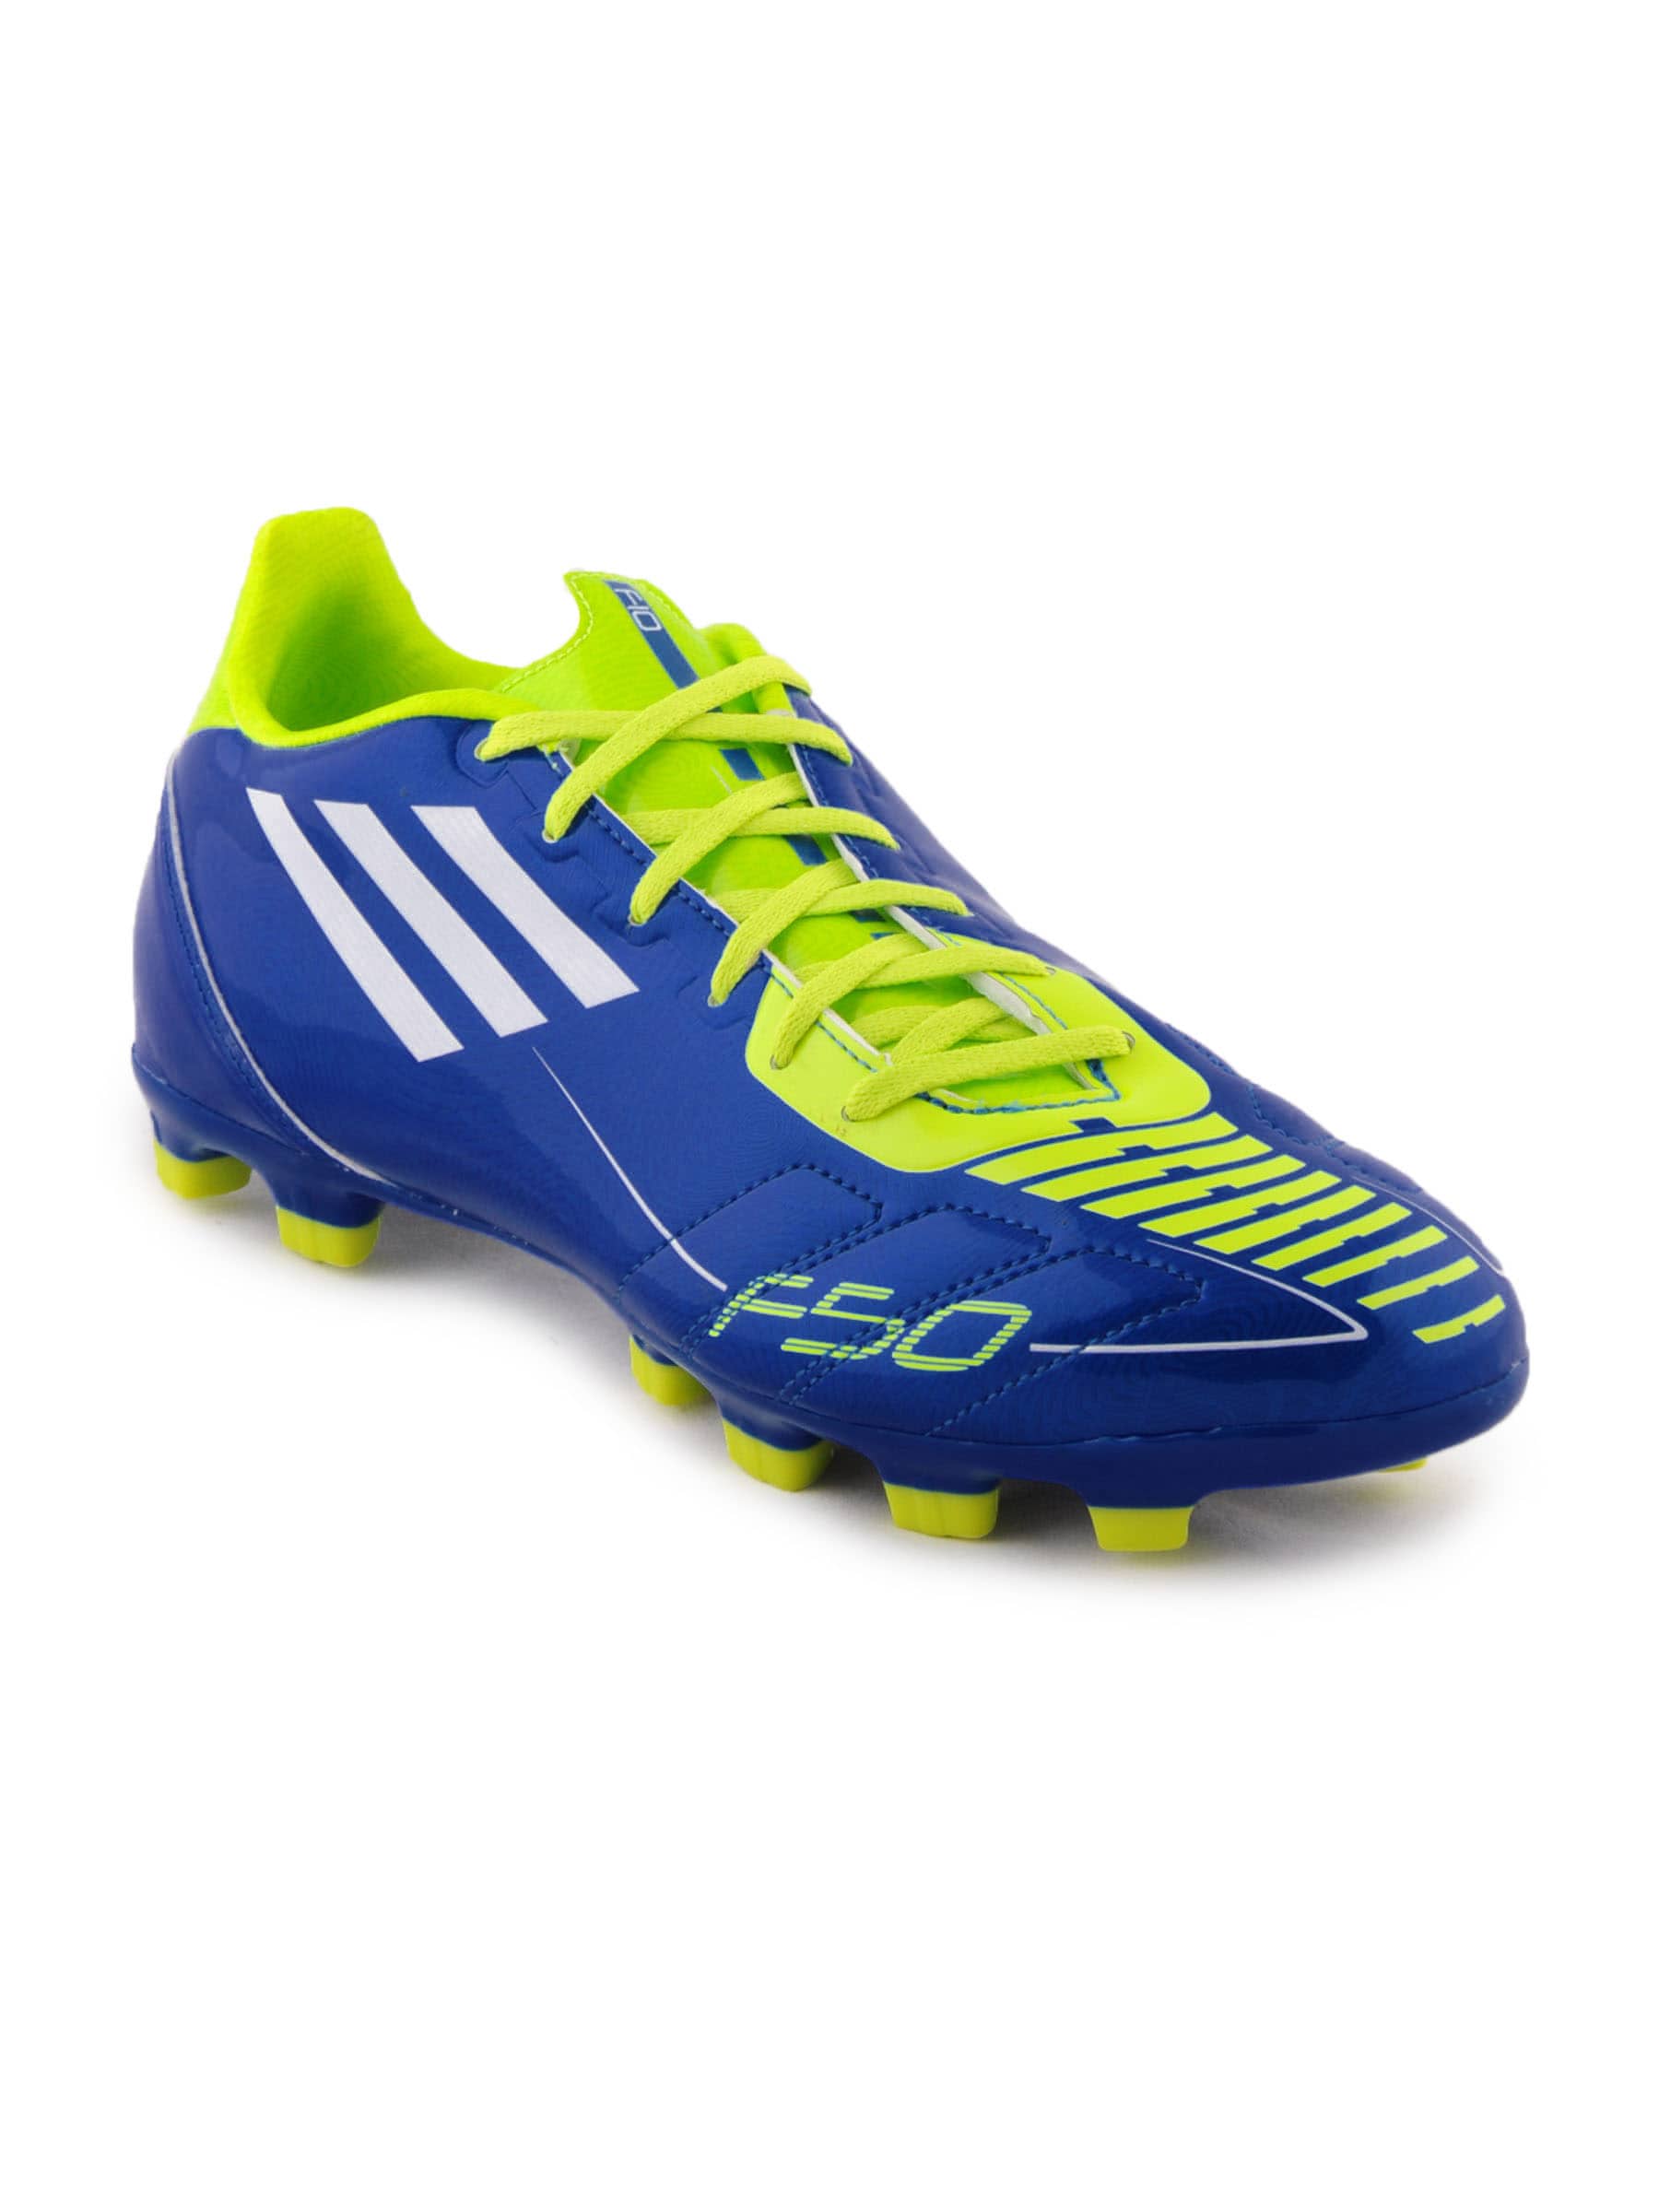 ADIDAS Men F10 Trx Blue Sports Shoes